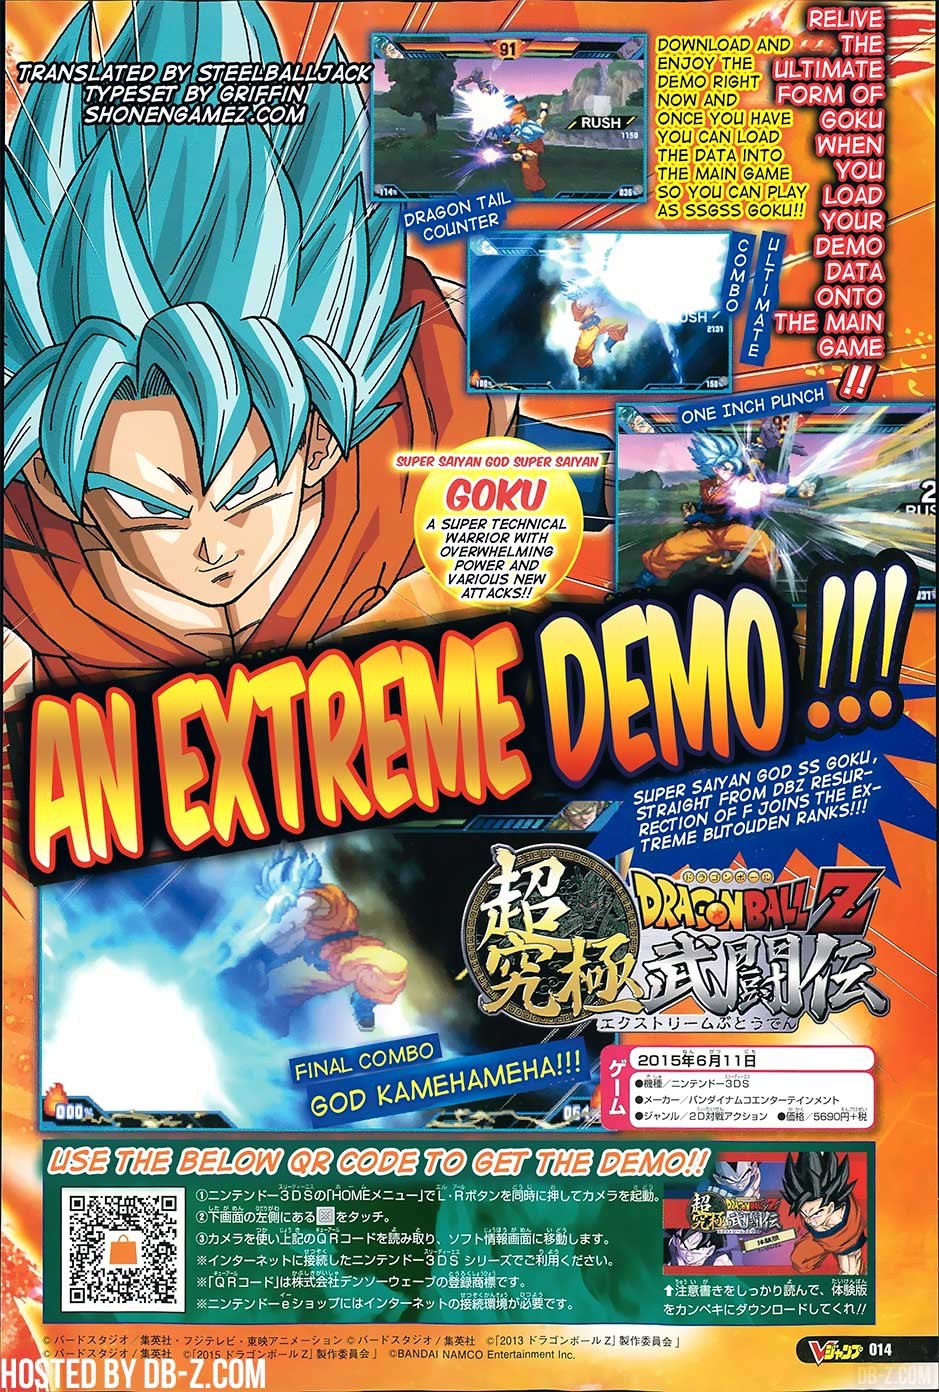 Dragon Ball Z Extreme Butoden (3DS) : La DEMO est dispo